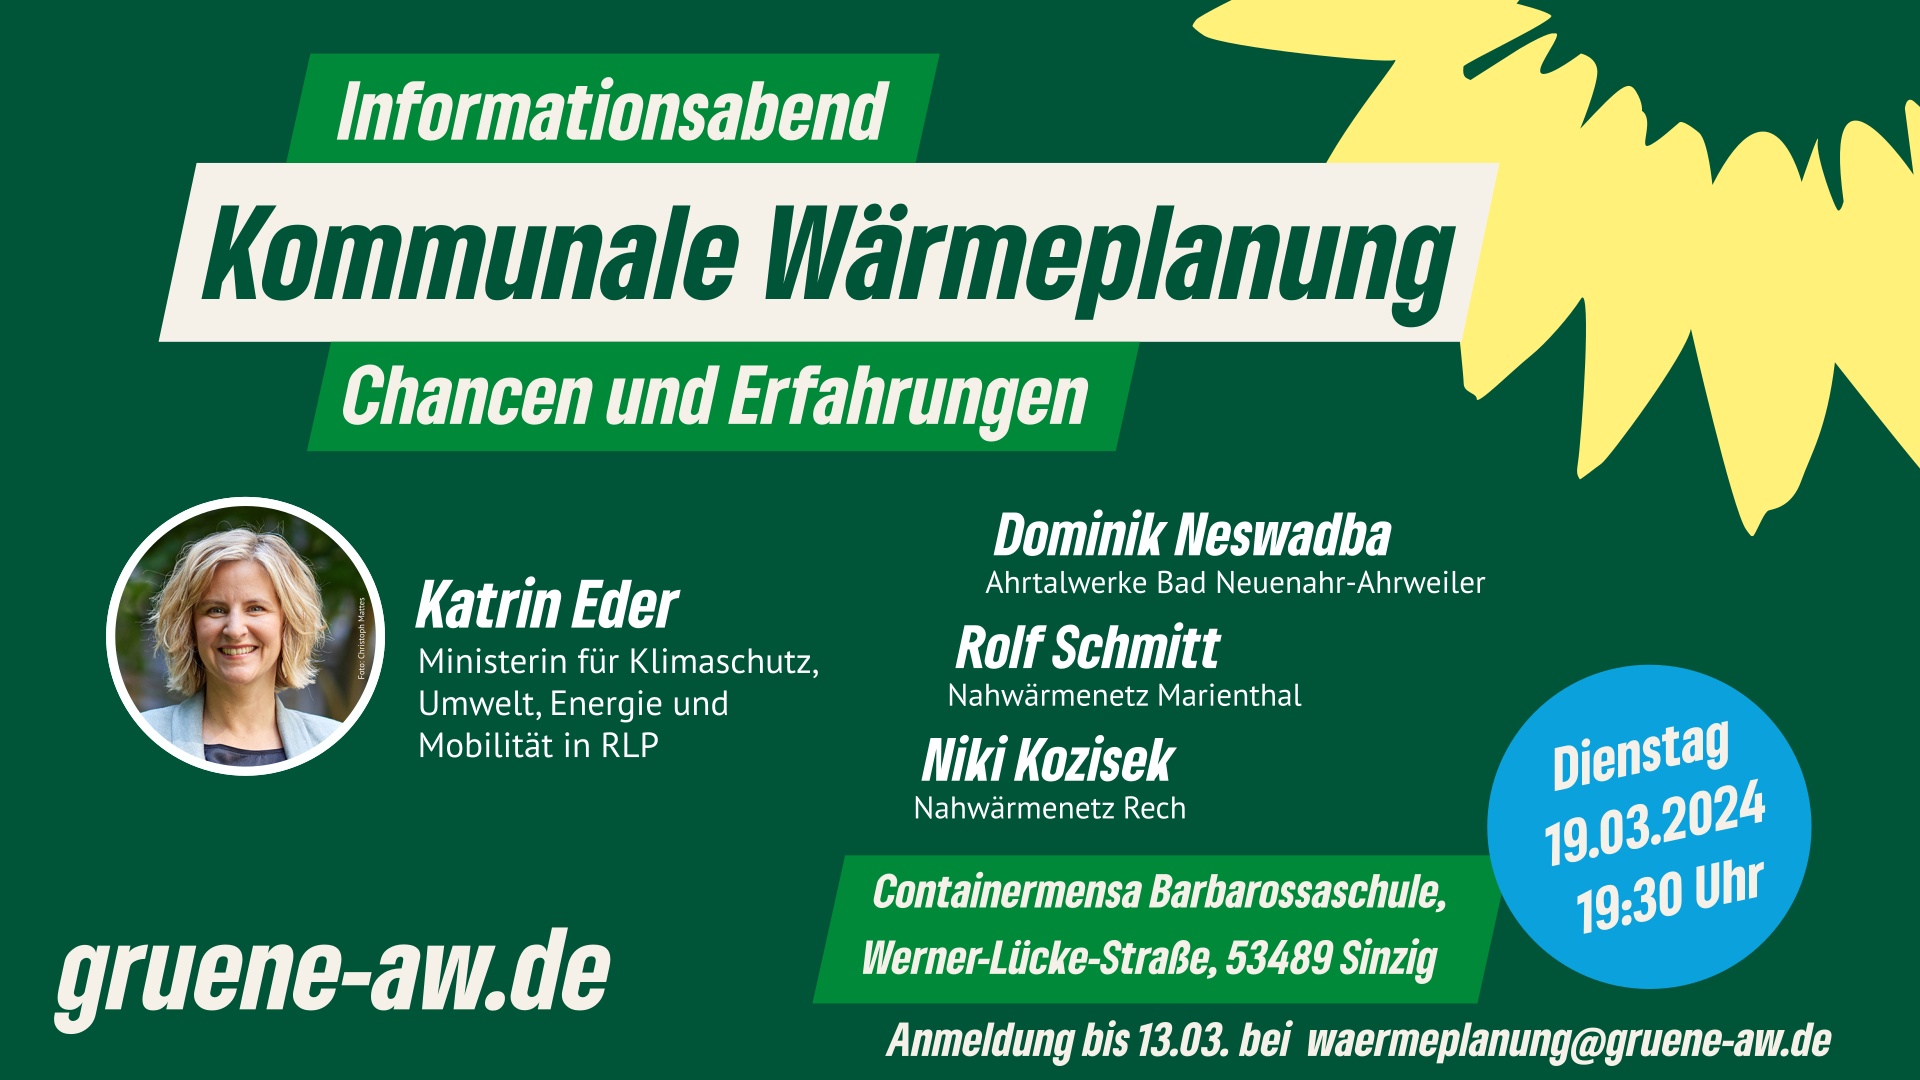 Die GRÜNEN im Kreis Ahrweiler laden ein zu einem Infoabend zum Thema Kommunale Wärmeplanung. Um Anmeldung per e-Mail an waermeplanung@gruene-aw.de wird gebeten.